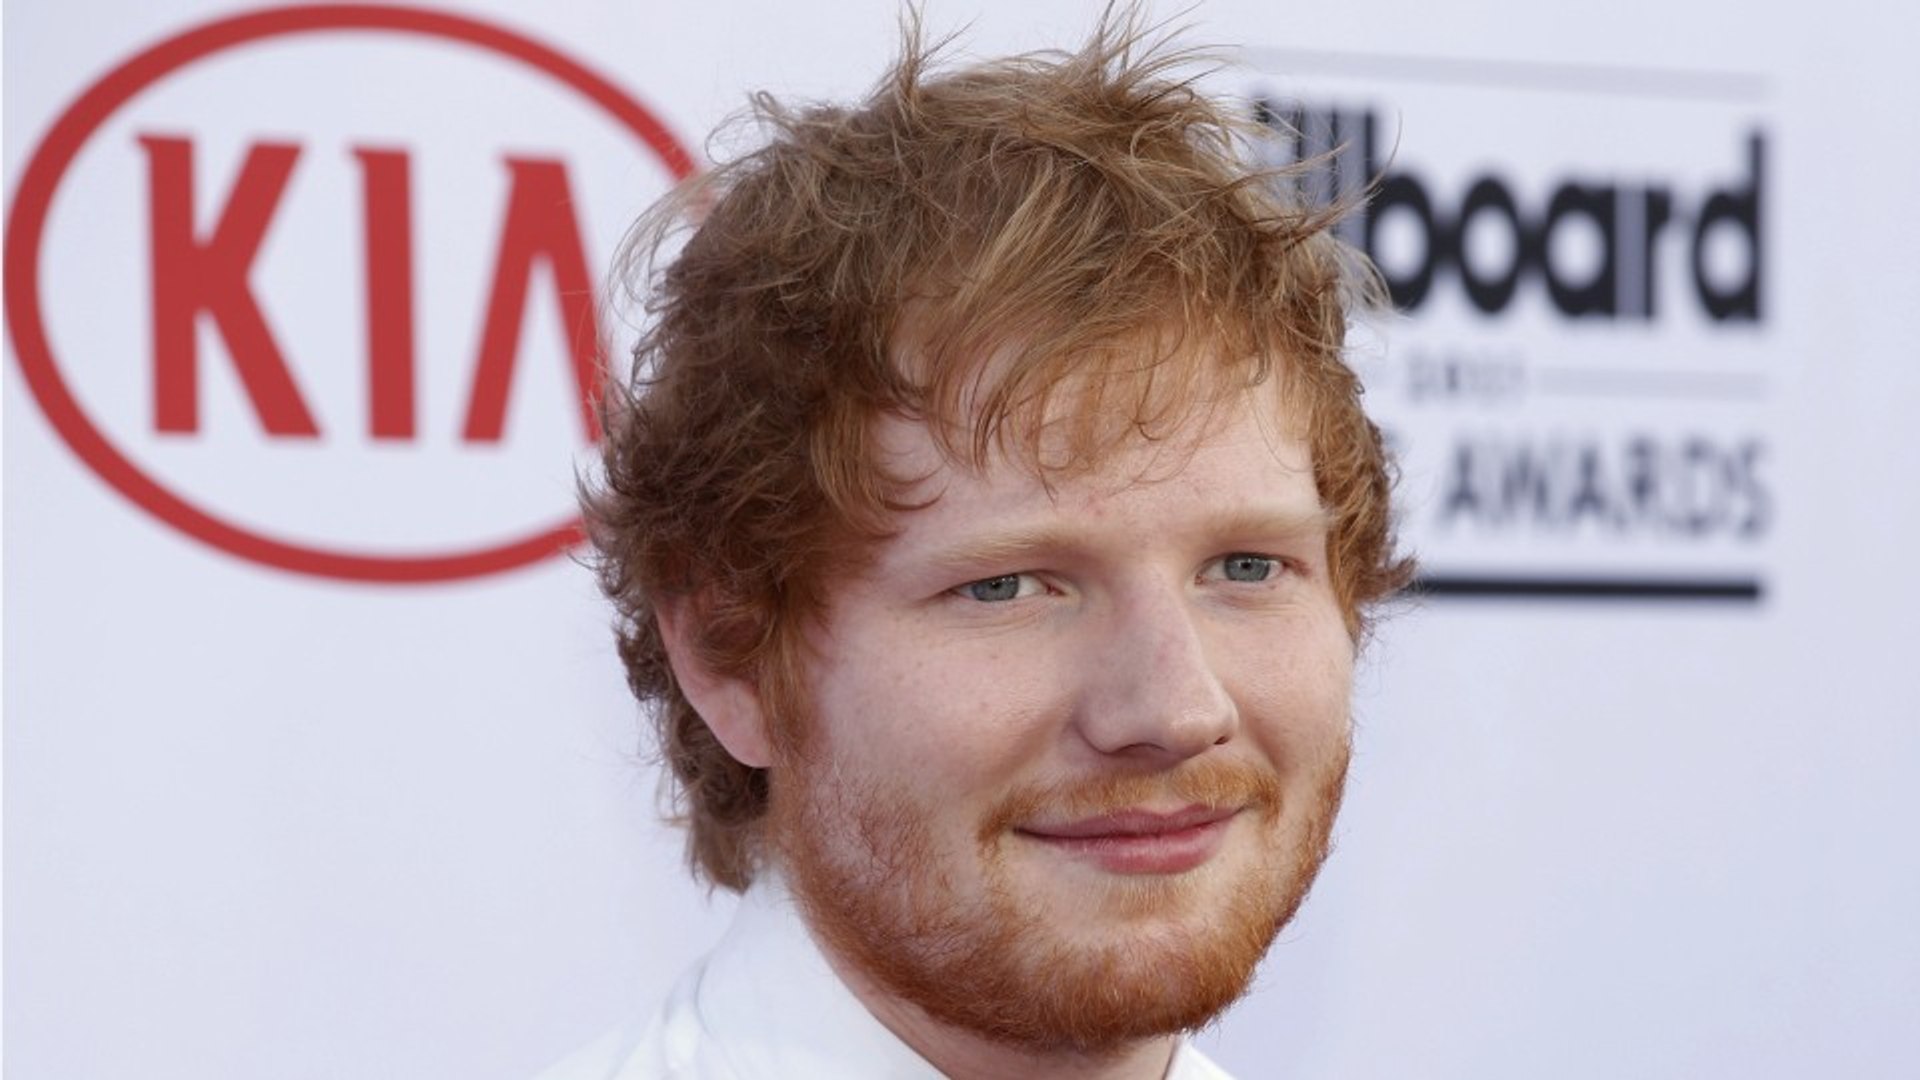 Ed Sheeran's New Album Takes Over US Record Charts